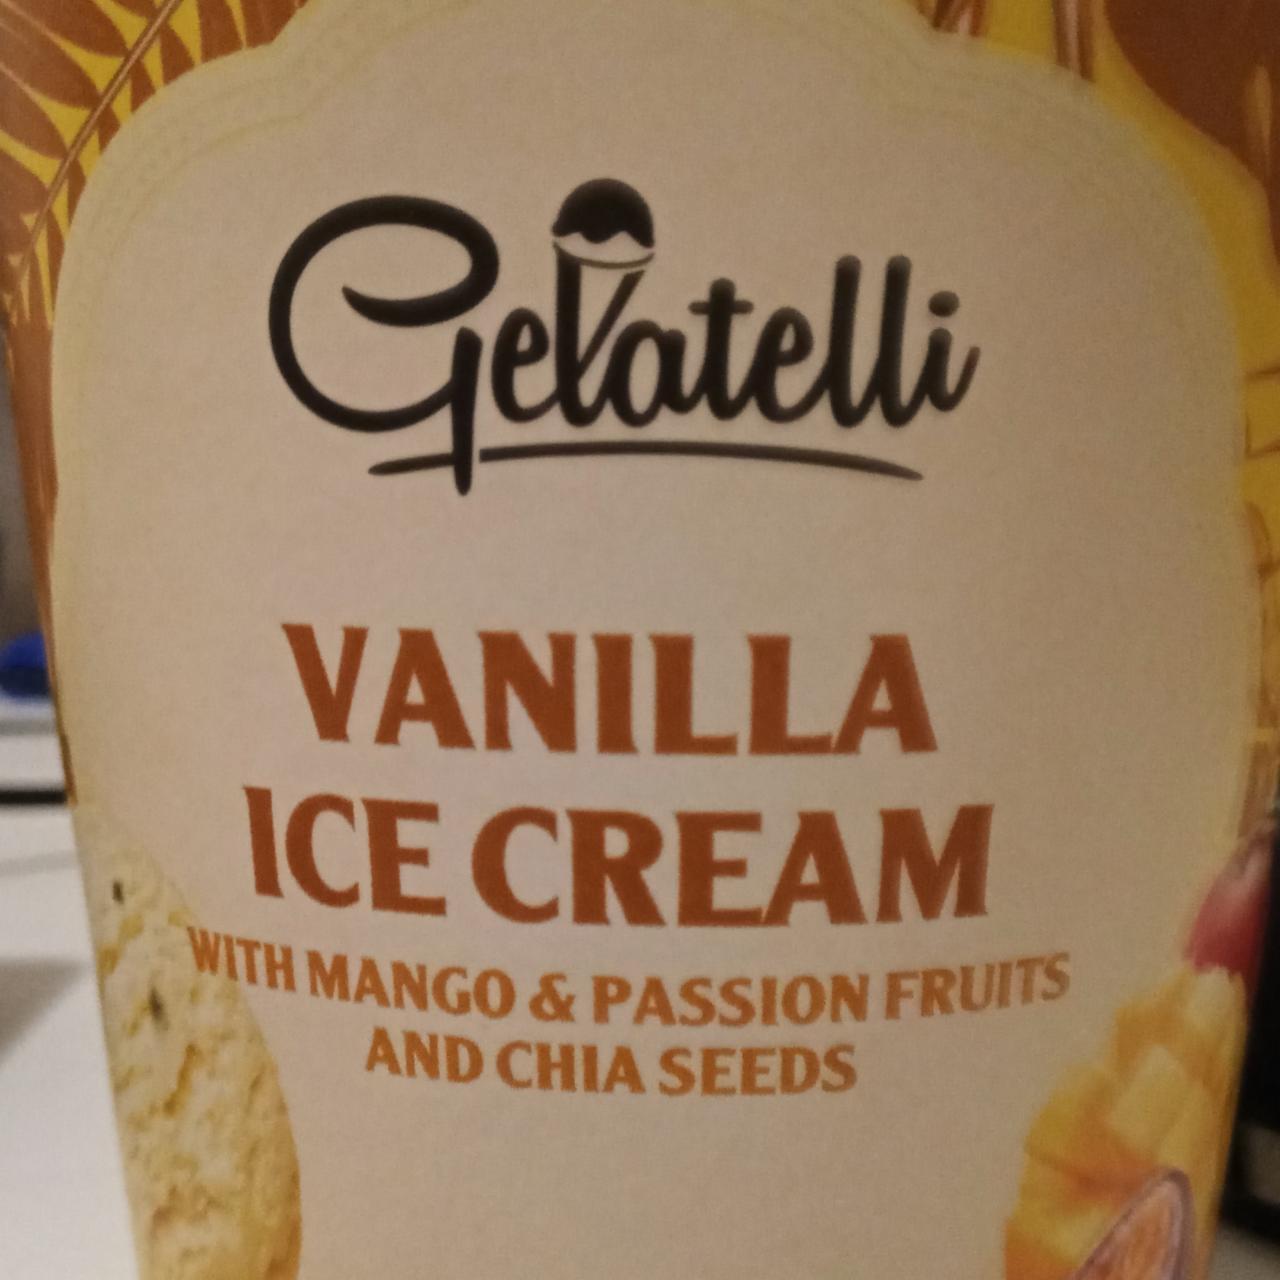 Fotografie - Vanilla Ice Cream with mango & passion fruits and chia seeds Gelatelli